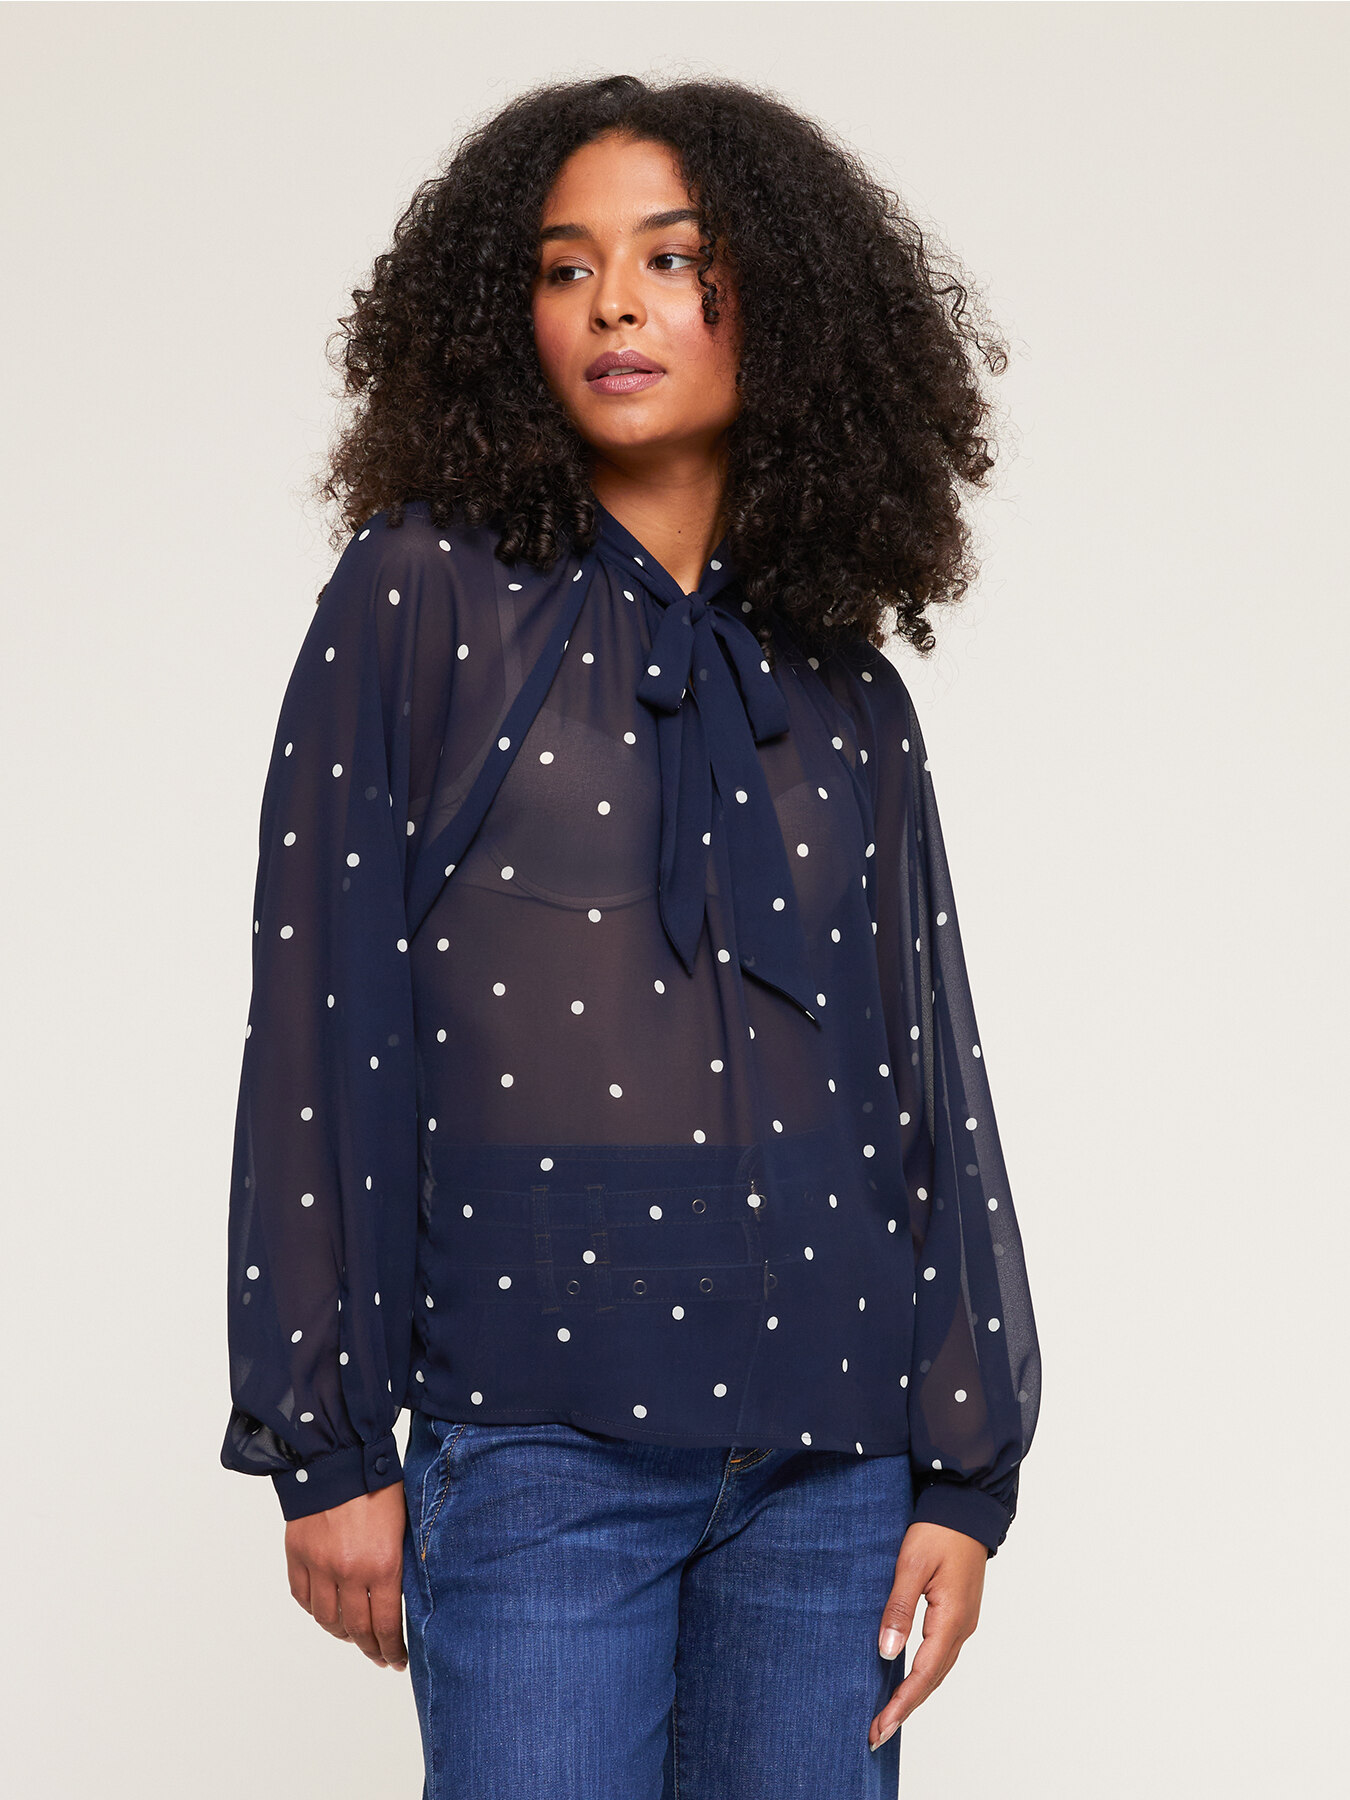 Chiffon oversized shirt with polka dot print image number 0